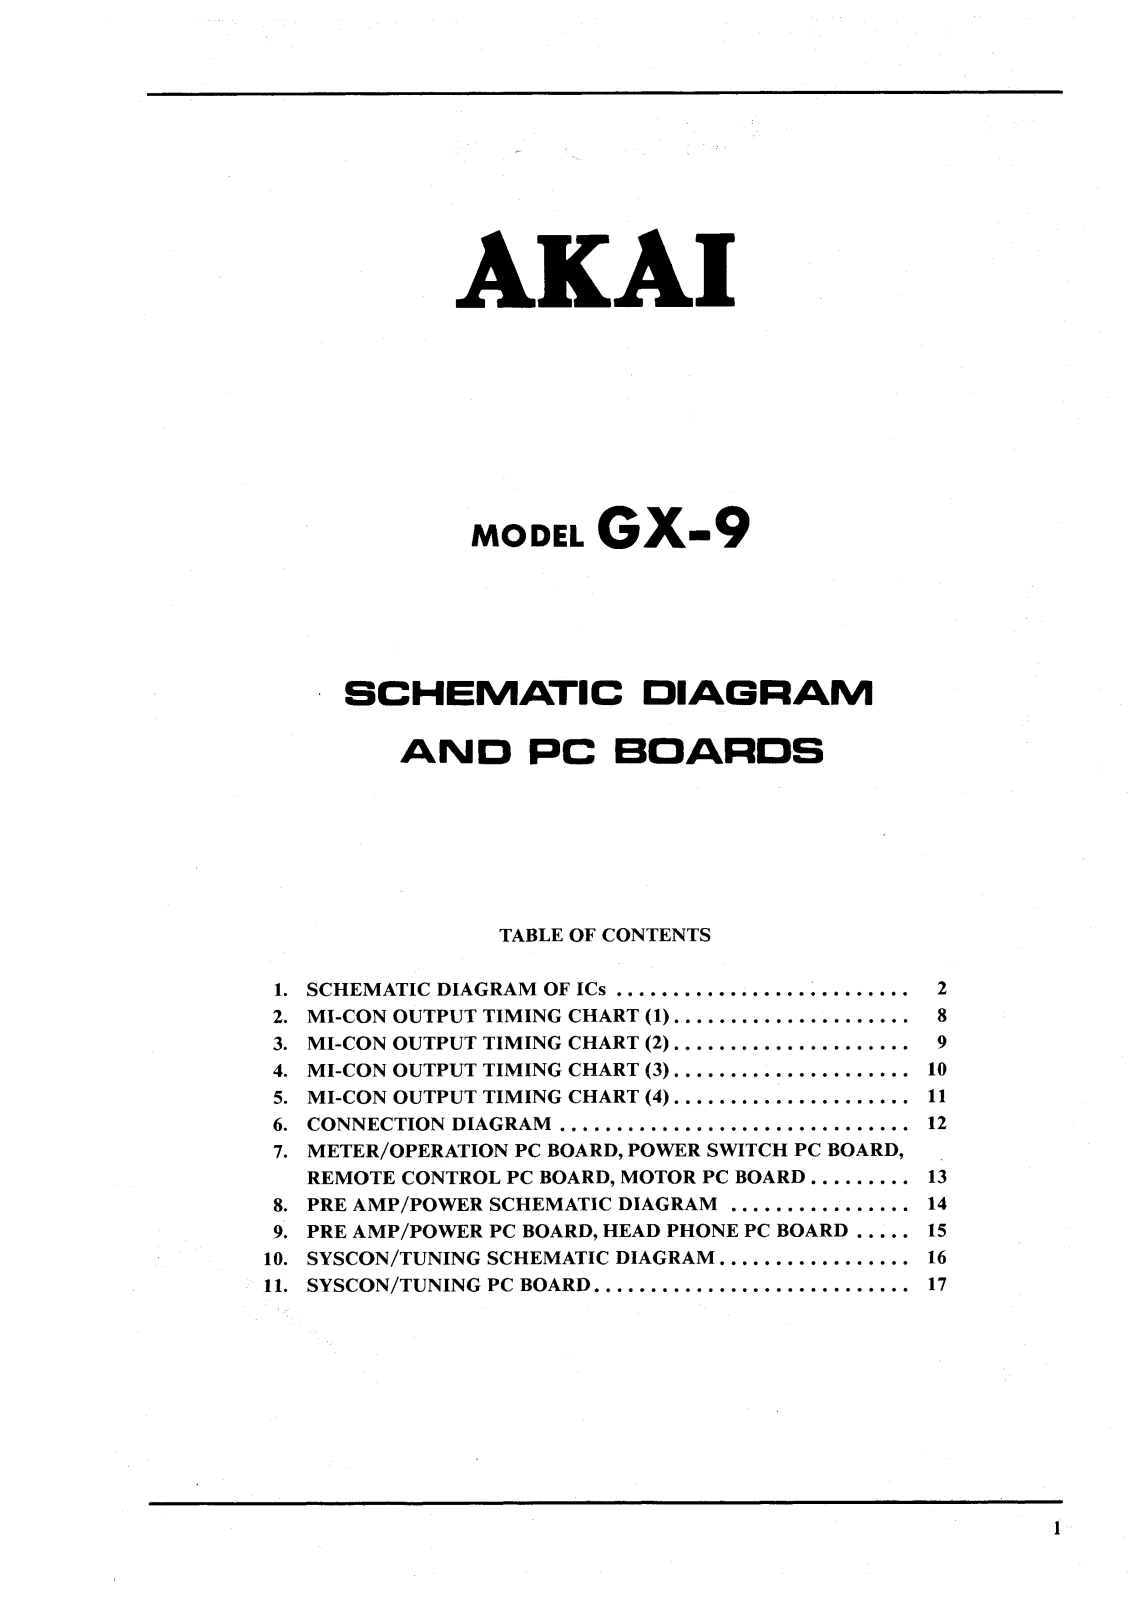 Akai GX9 Schematic